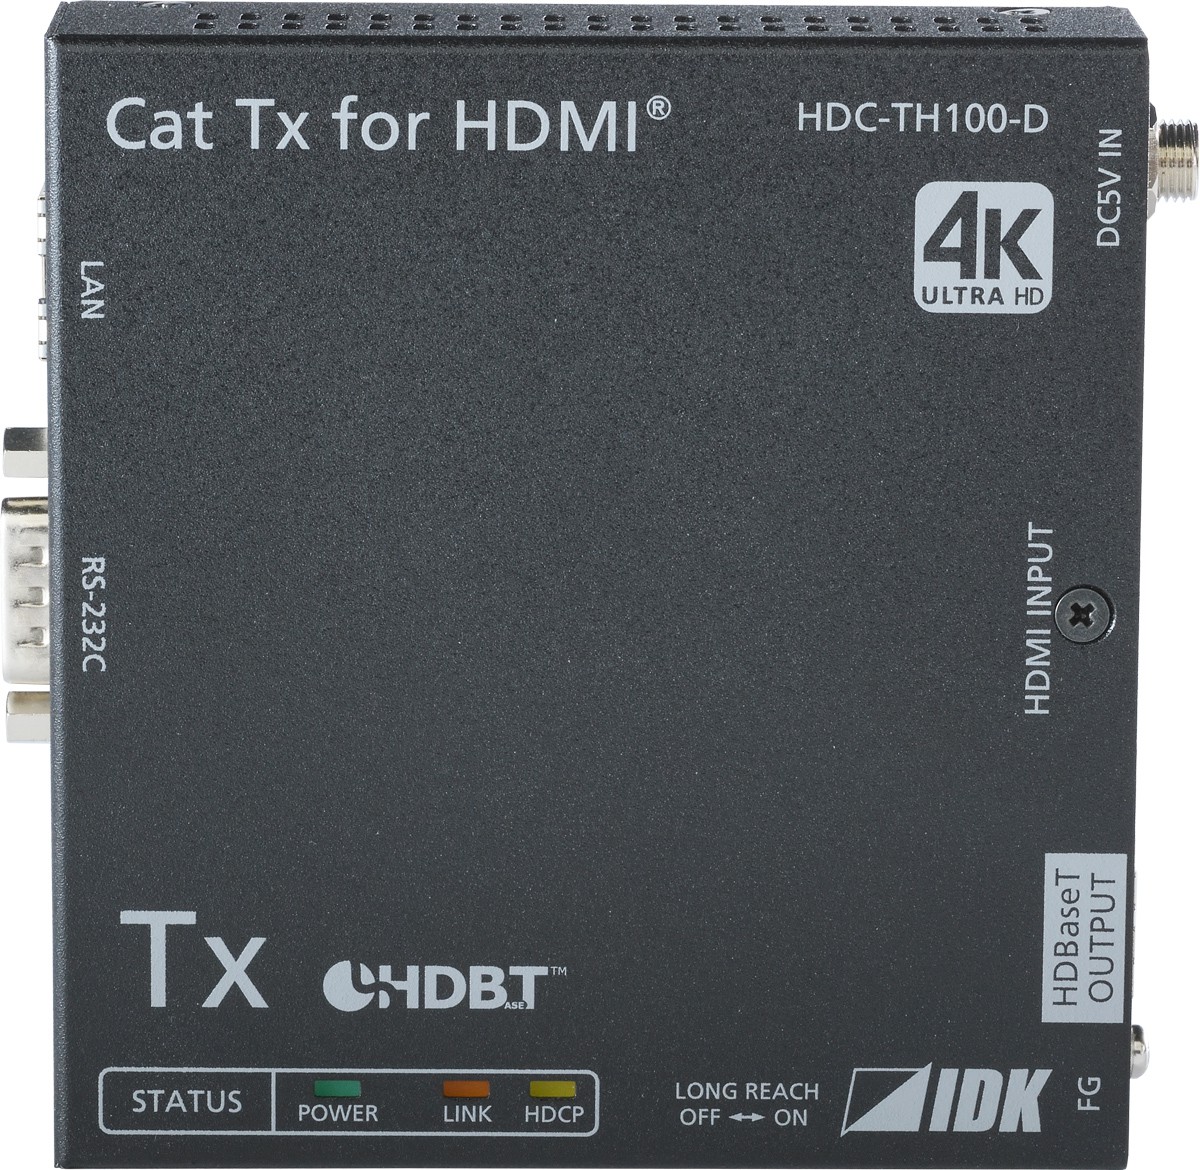 HDC-TH100-D